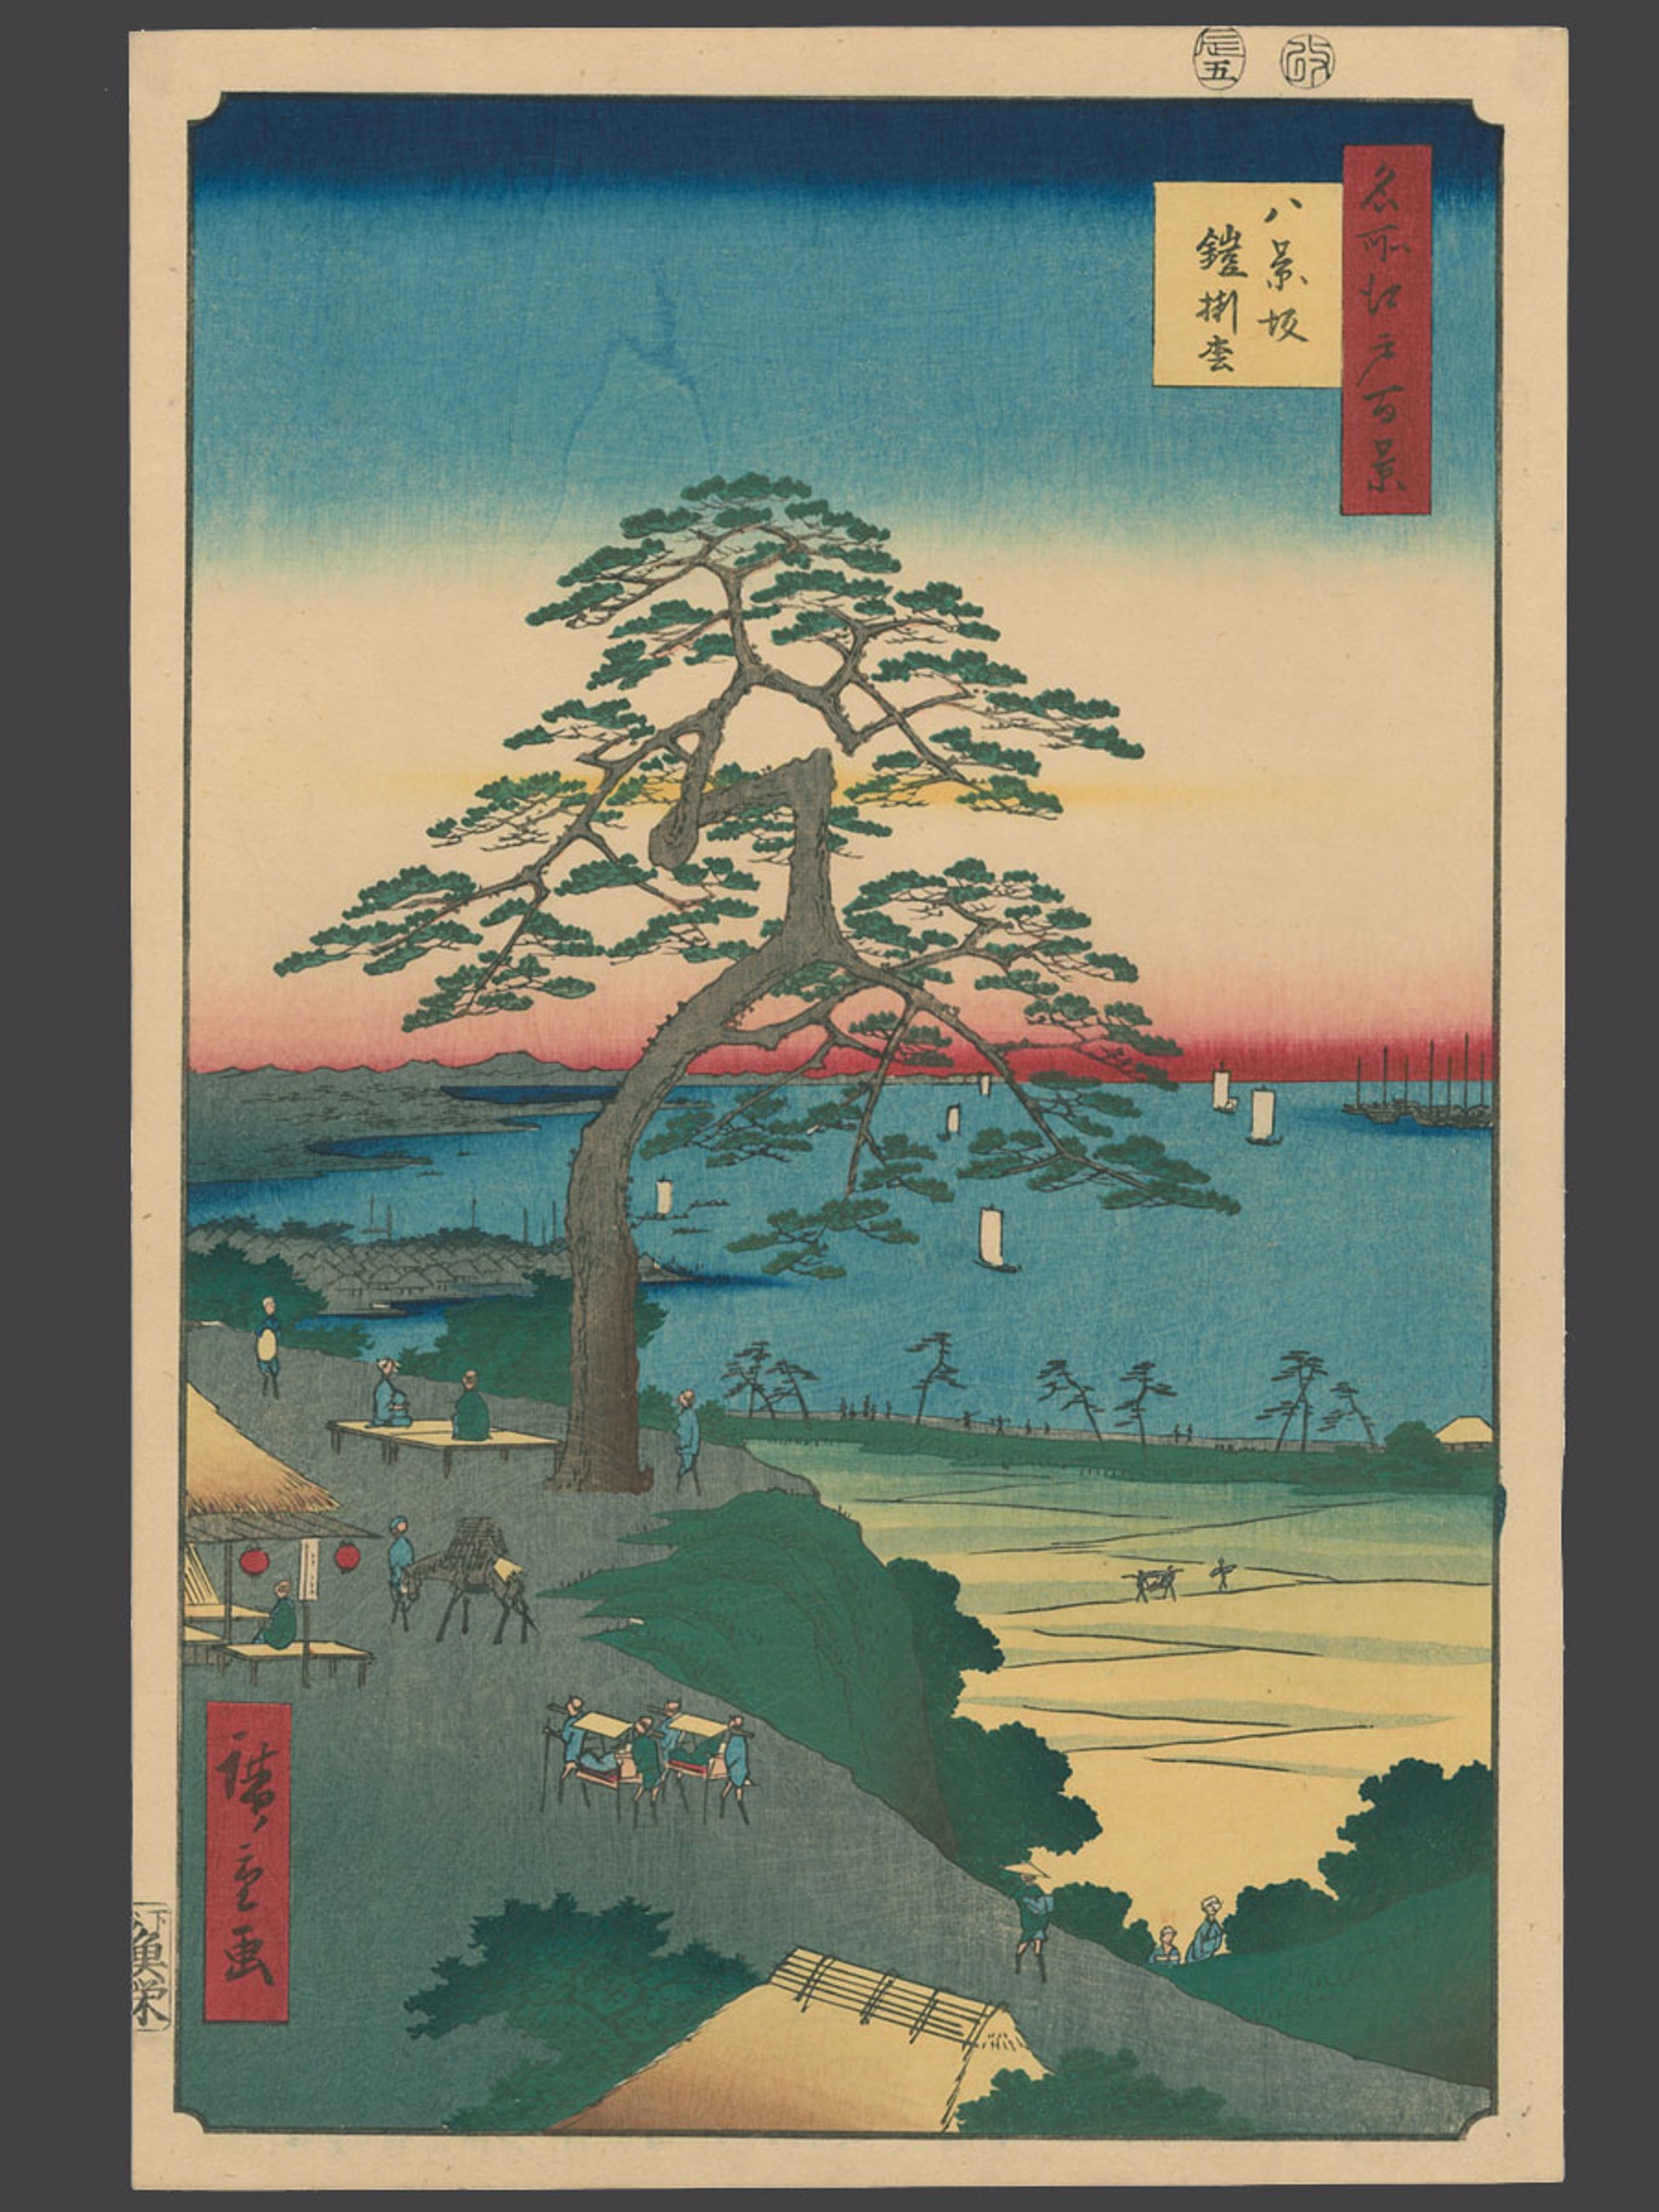 #26 The Armor Pine on Hakkei Hill 100 Views of Edo by Hiroshige